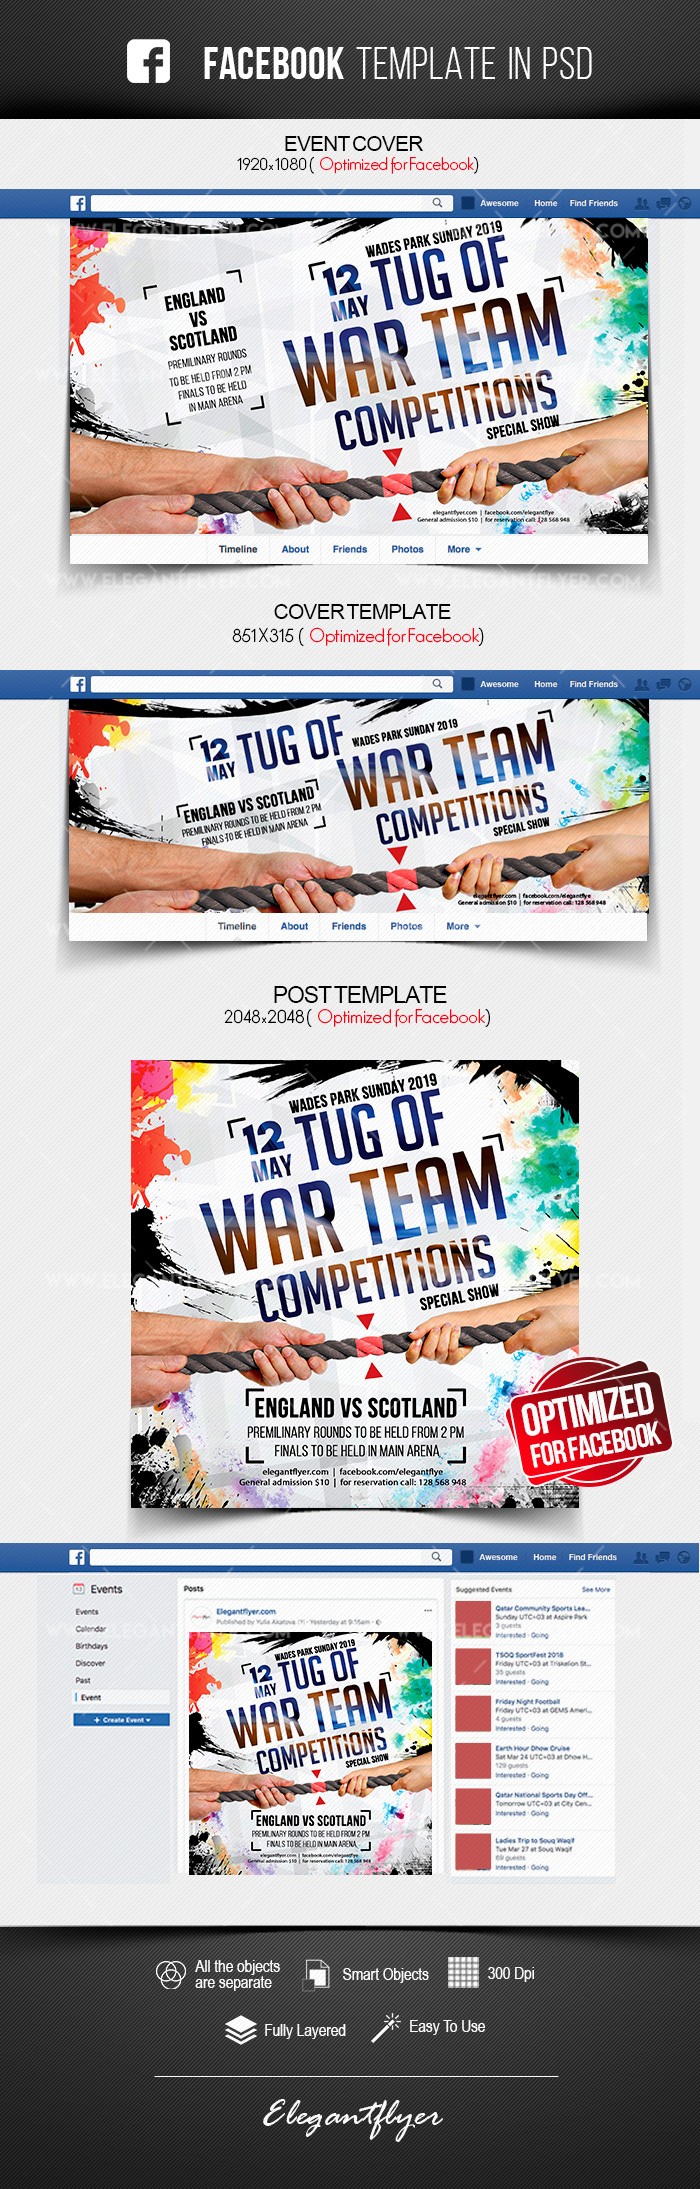 Competições de equipe de cabo de guerra Facebook by ElegantFlyer